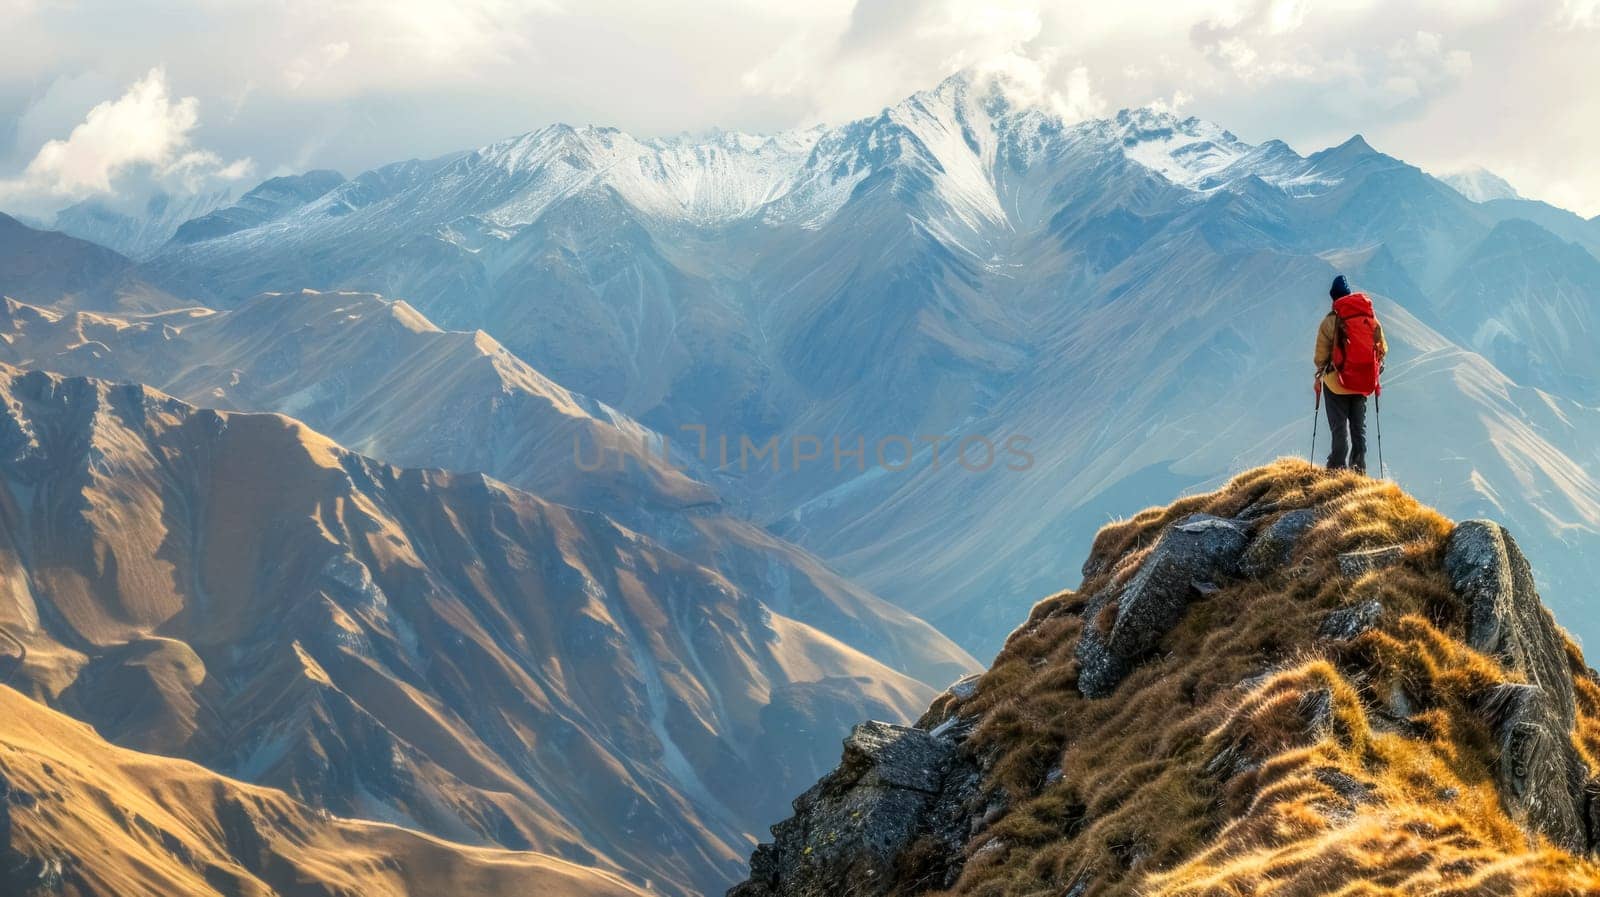 Solitary hiker overlooking mountain range by Edophoto